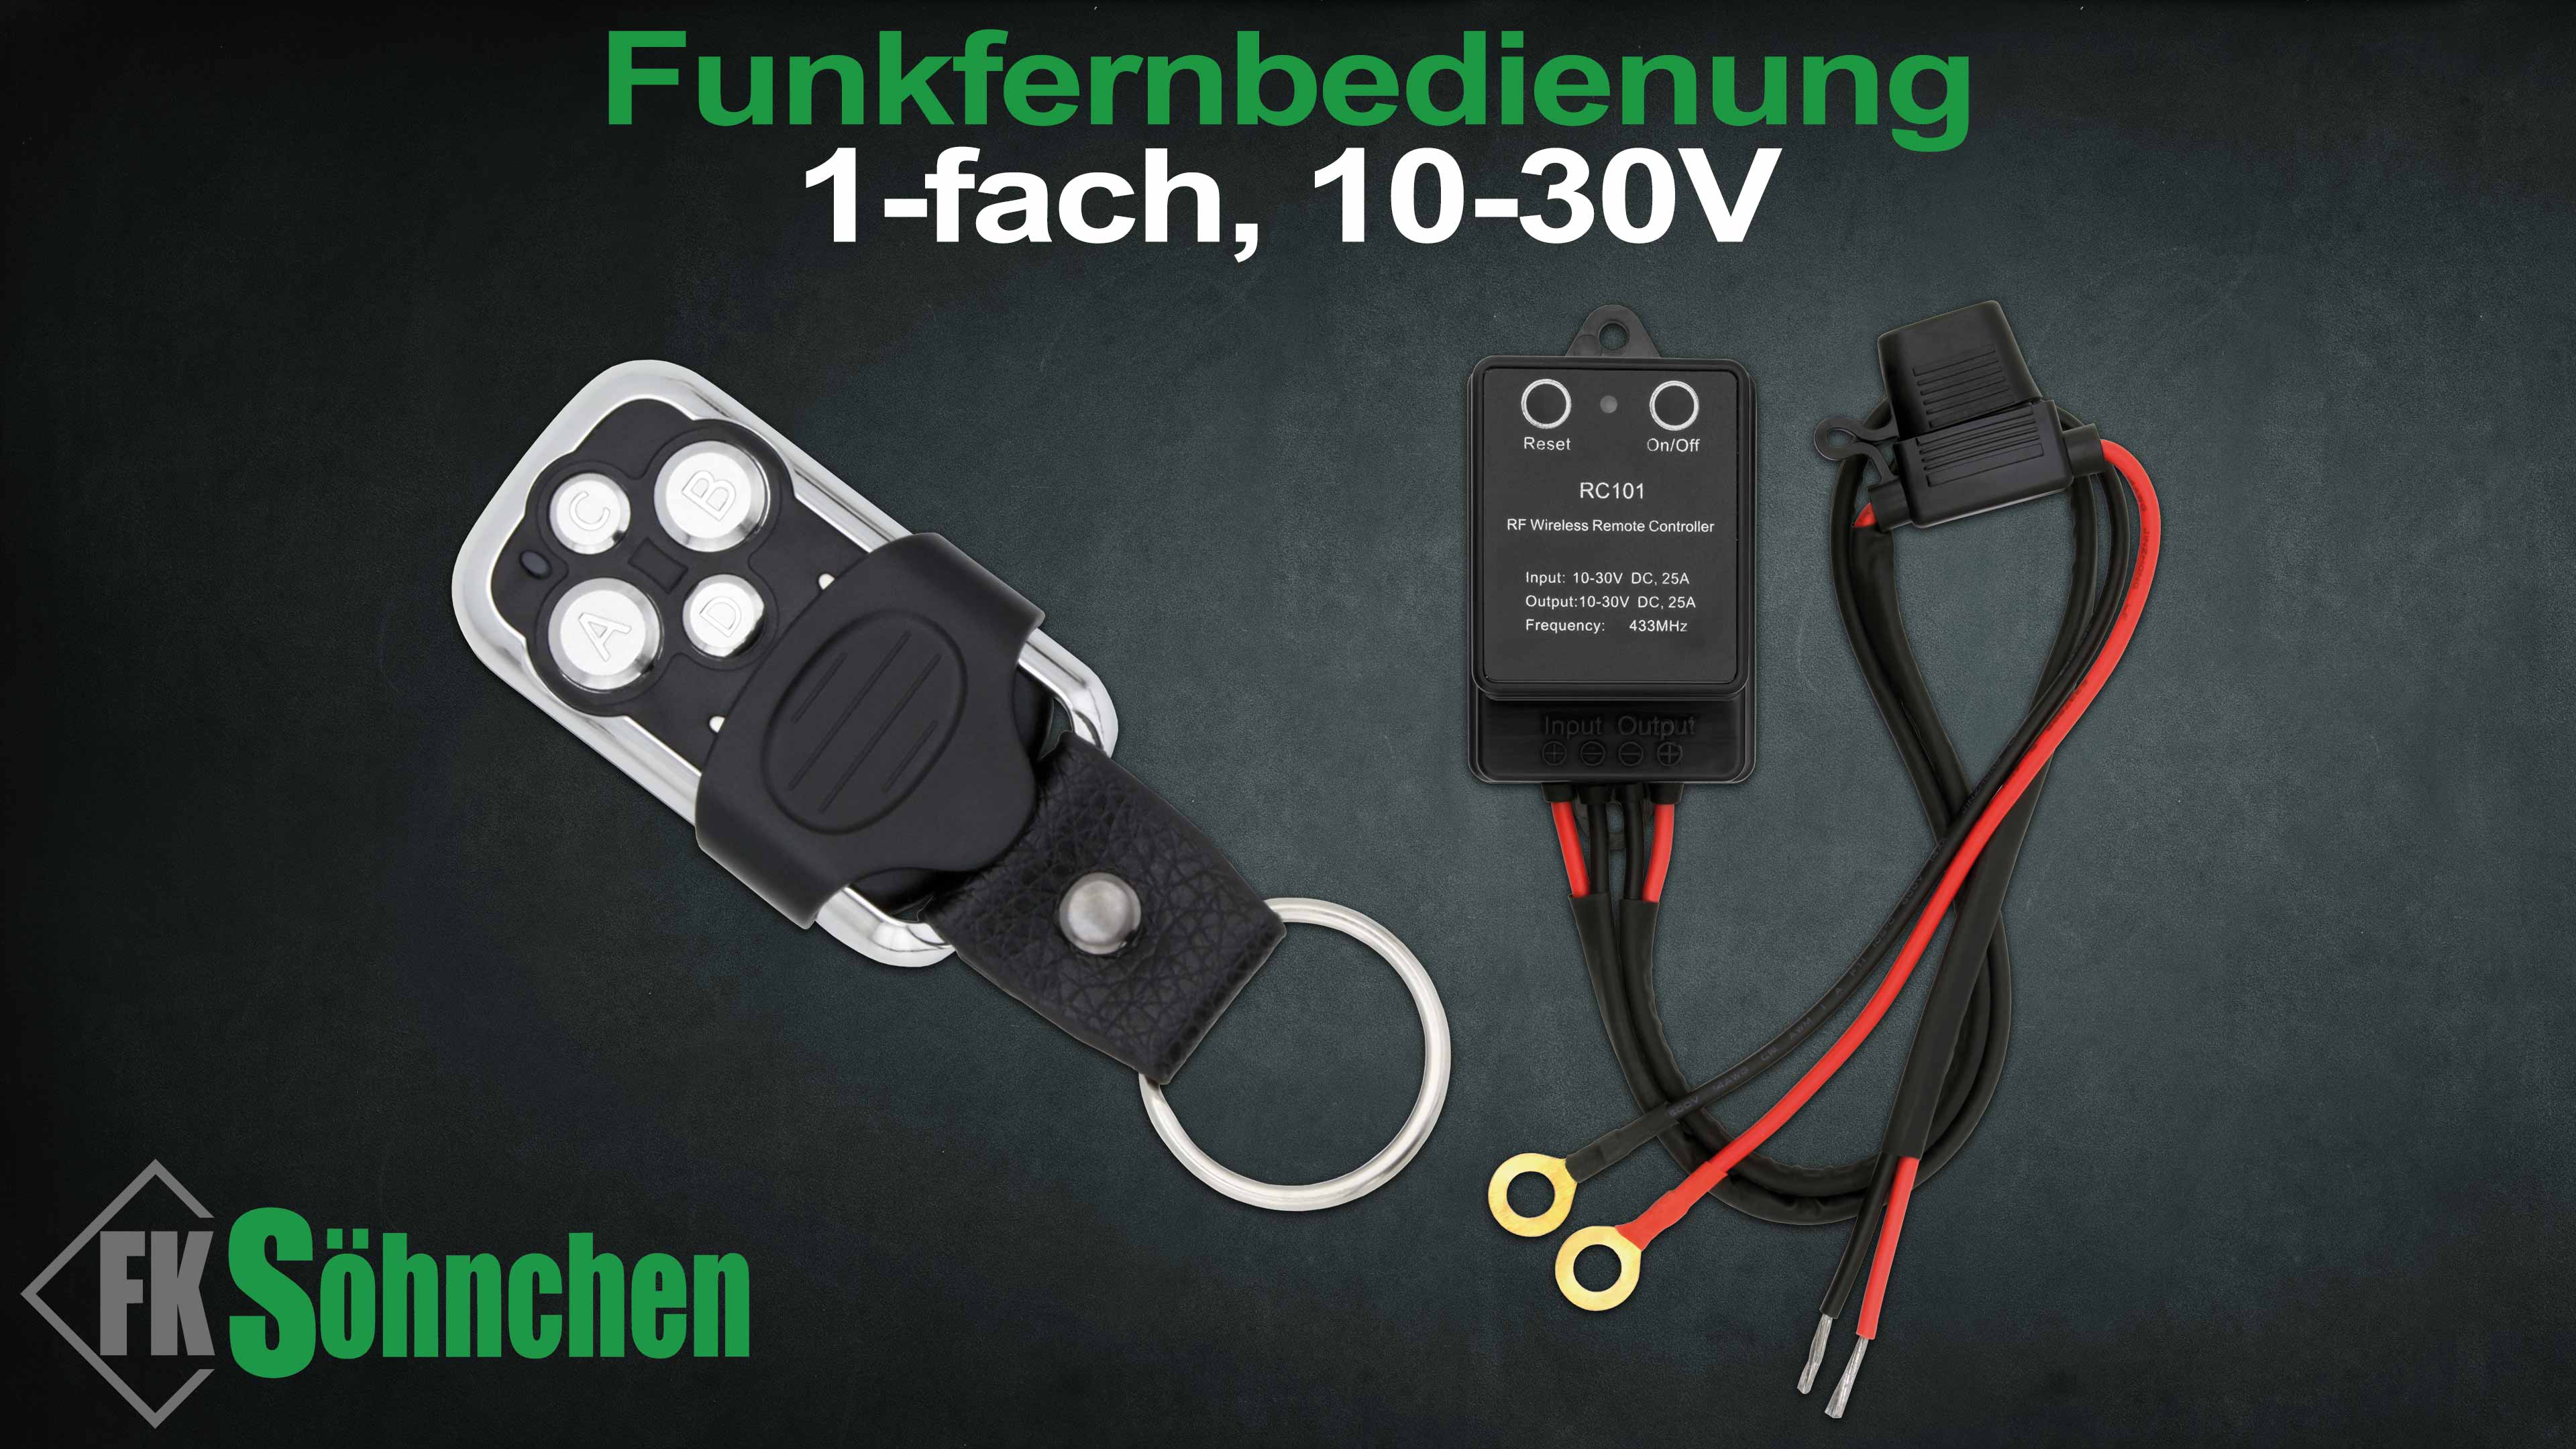 FK Söhnchen*  LED Akku Rundumleuchte mit Fernbedienung und Magnetfuß LED Akku  Rundumleuchte mit Fernbedienung und Magnetfuß